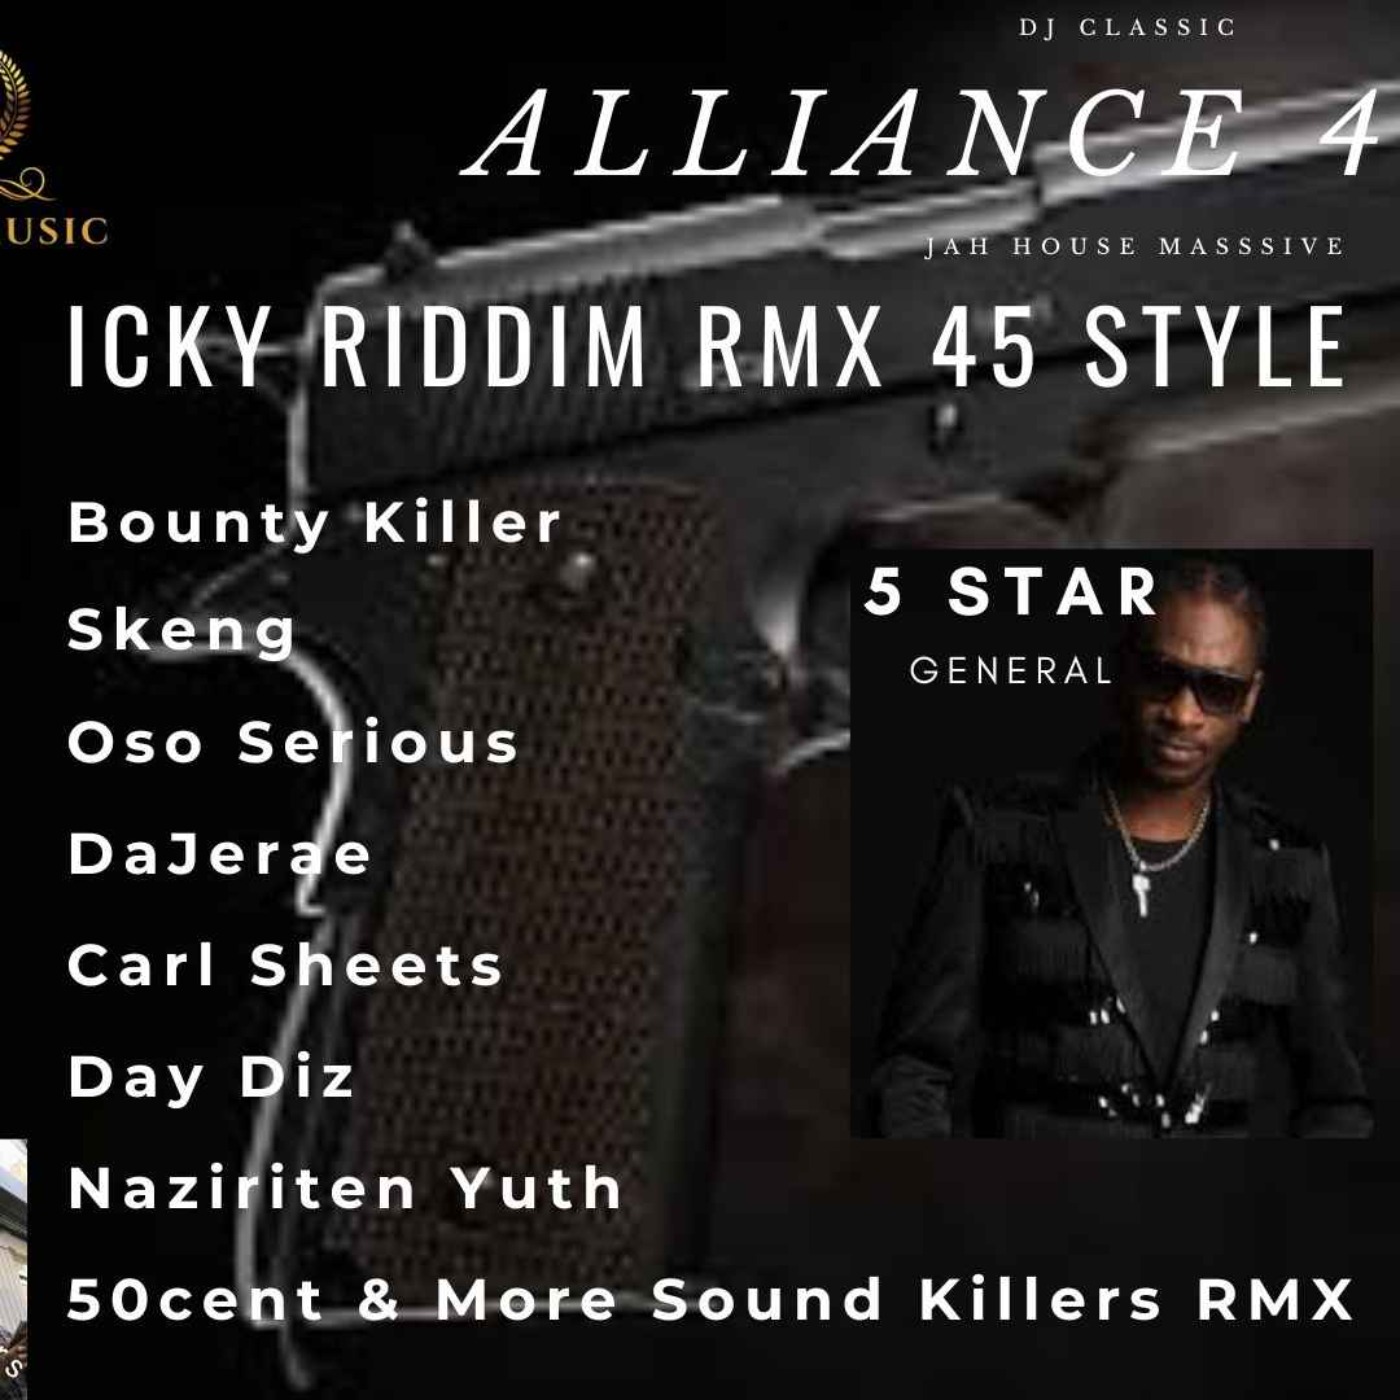 cover art for Icky Riddim RMX By Sound Killer & Dj Classic